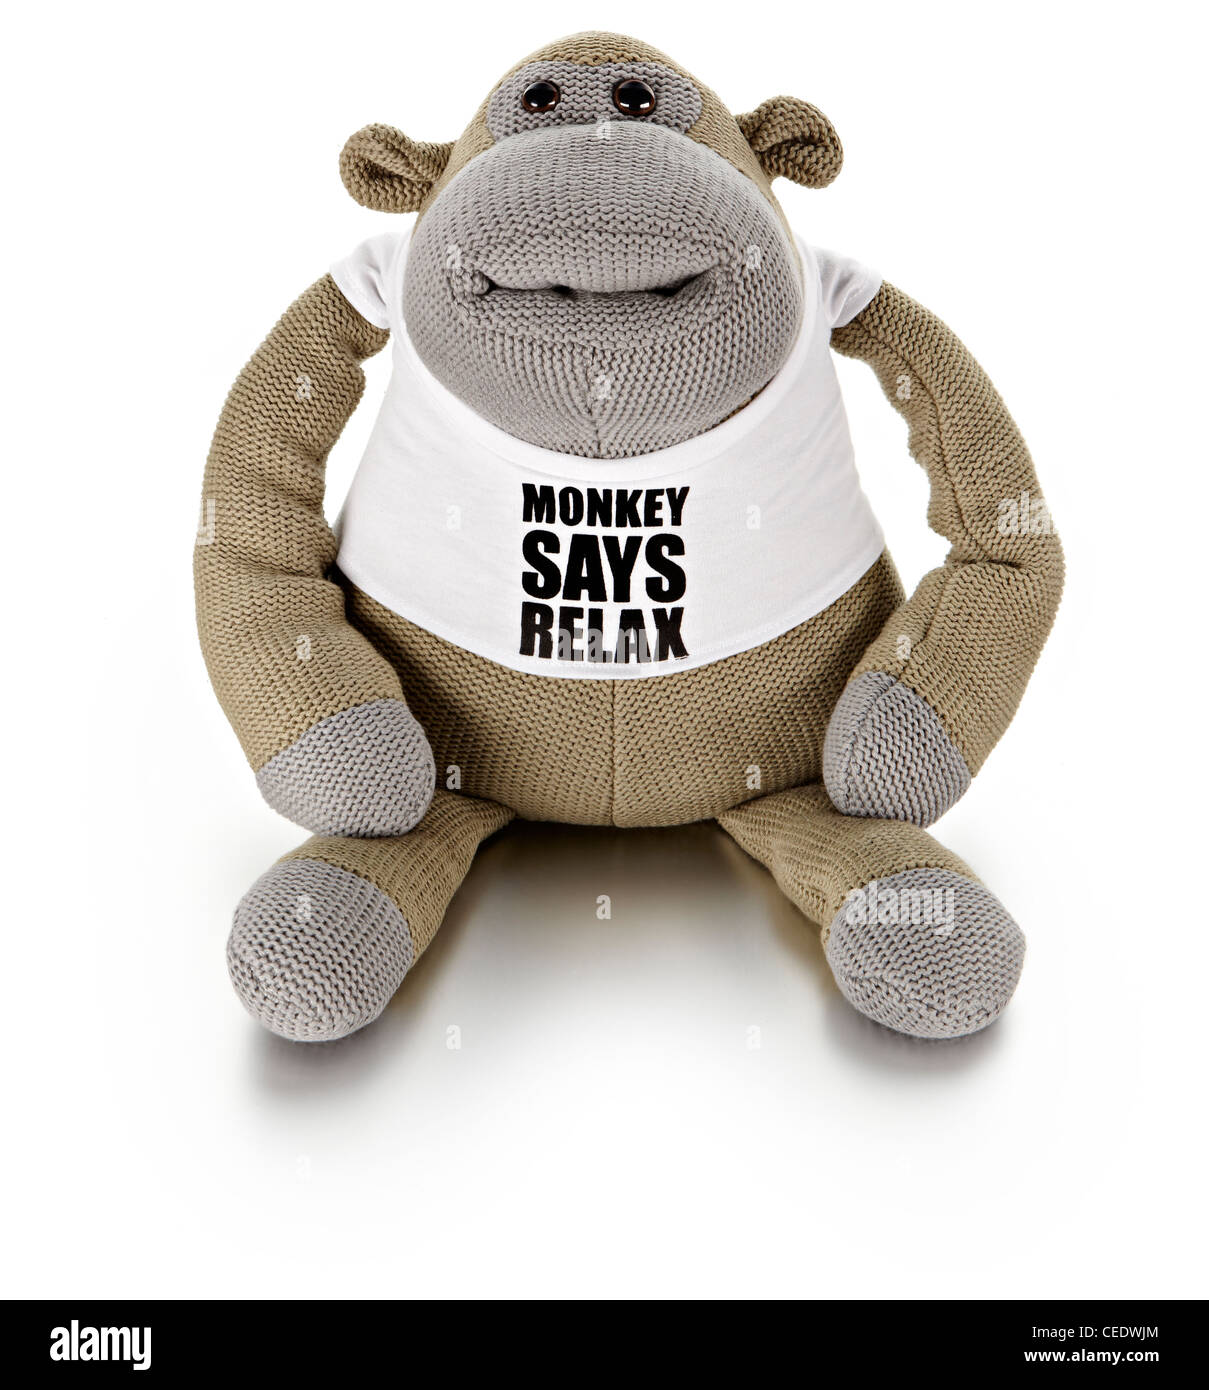 Monkey stuffed toy Stock Photo